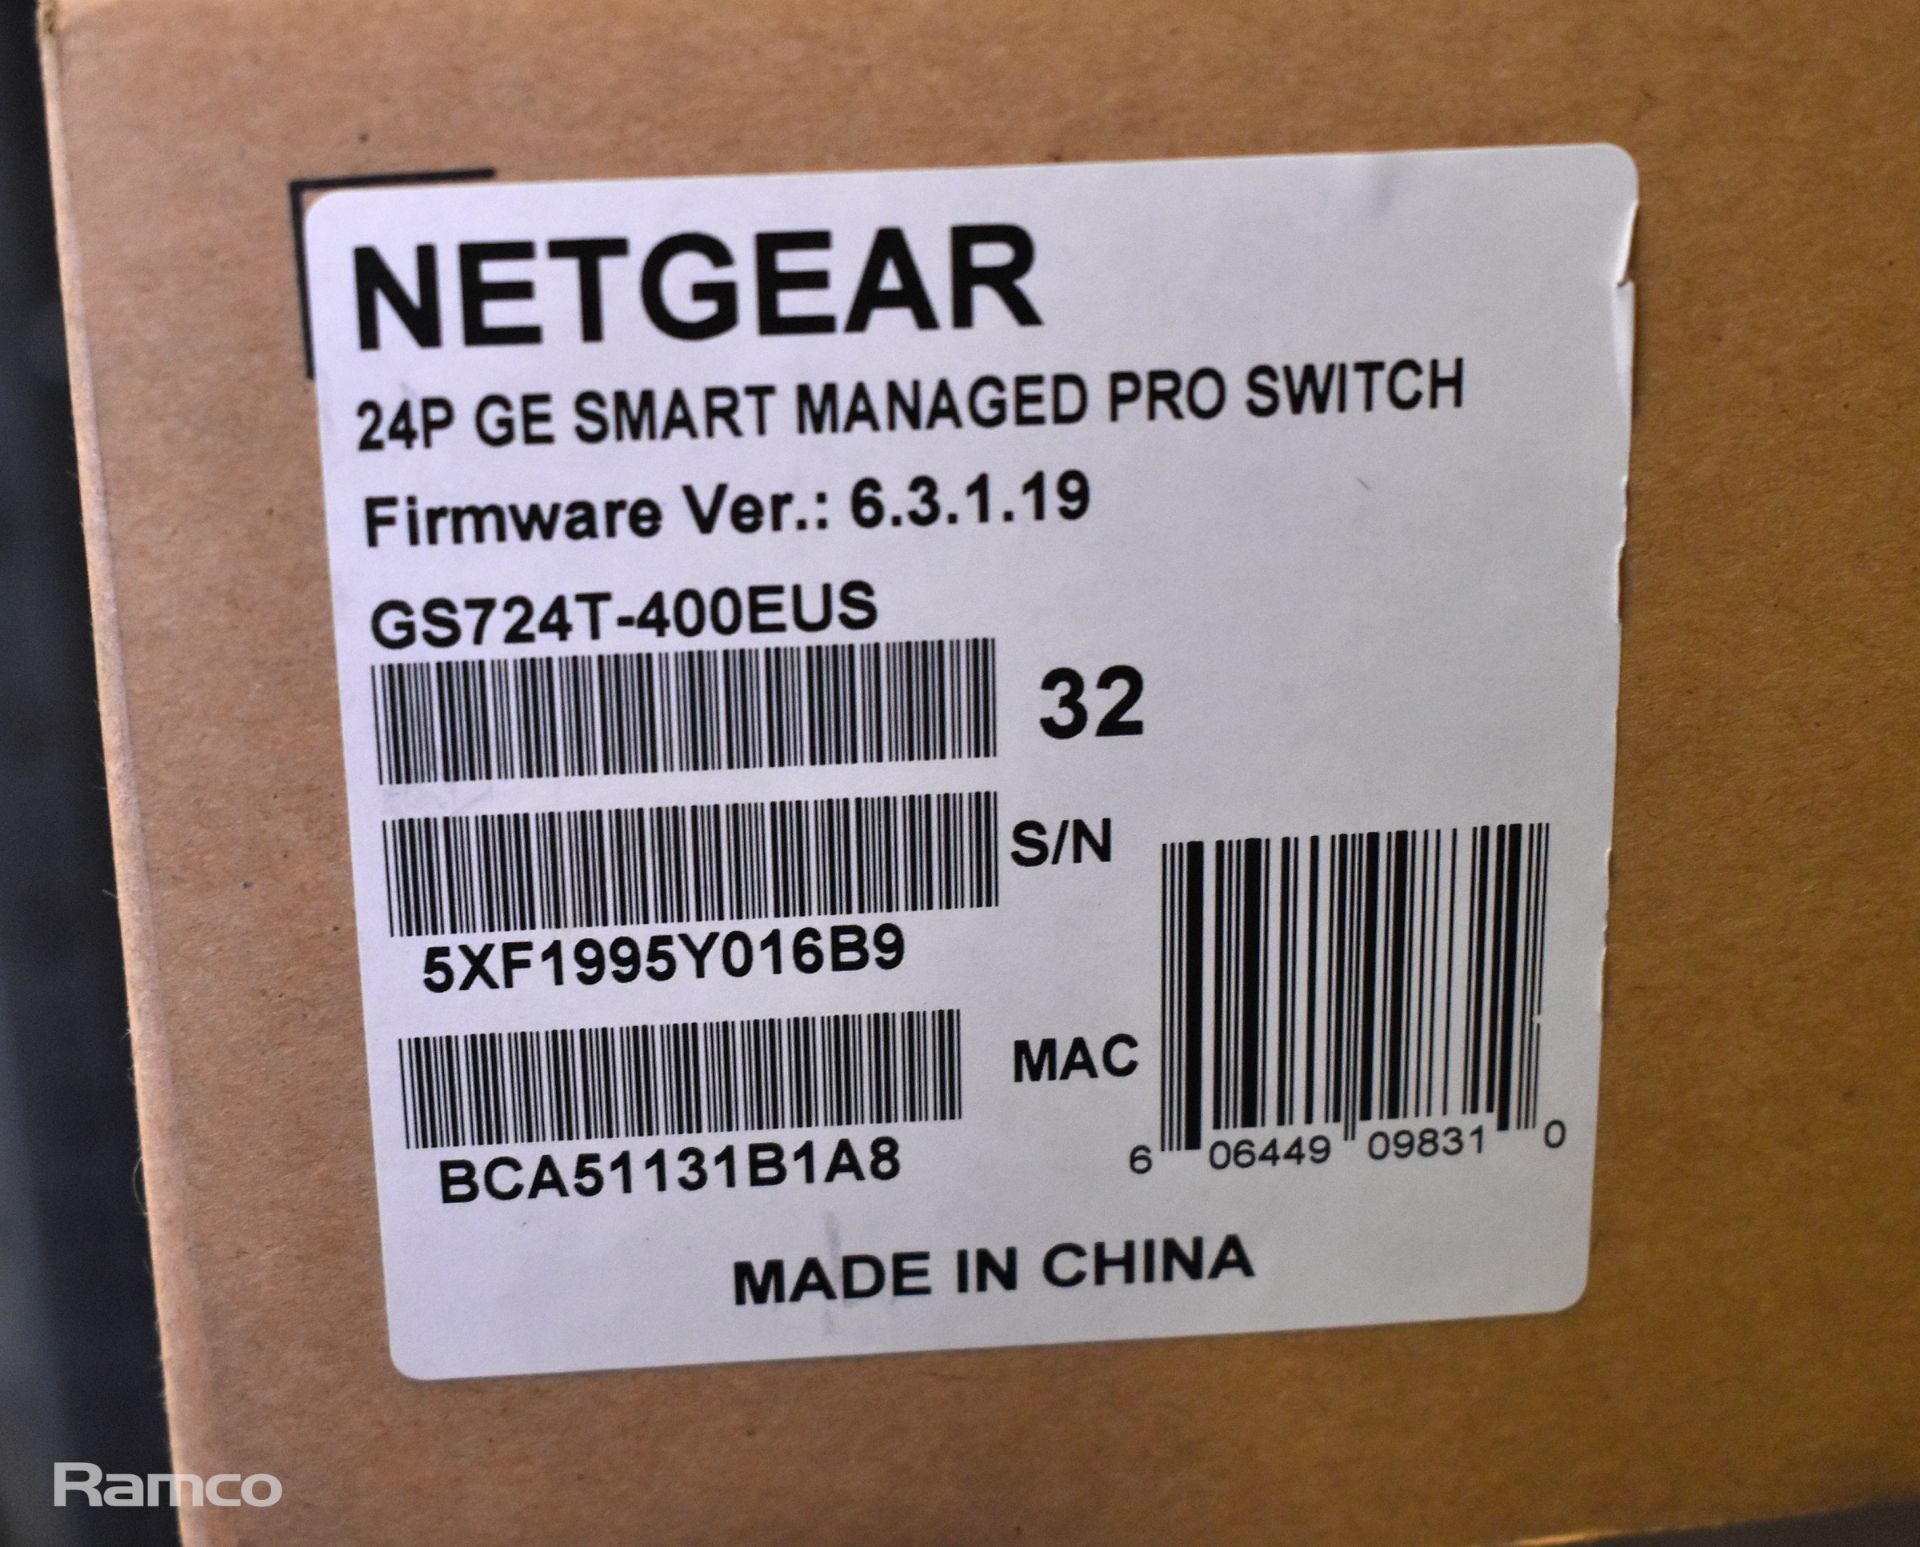 Netgear GS724T-400EUS 24 port GE smart gigabit network switch - Image 3 of 3